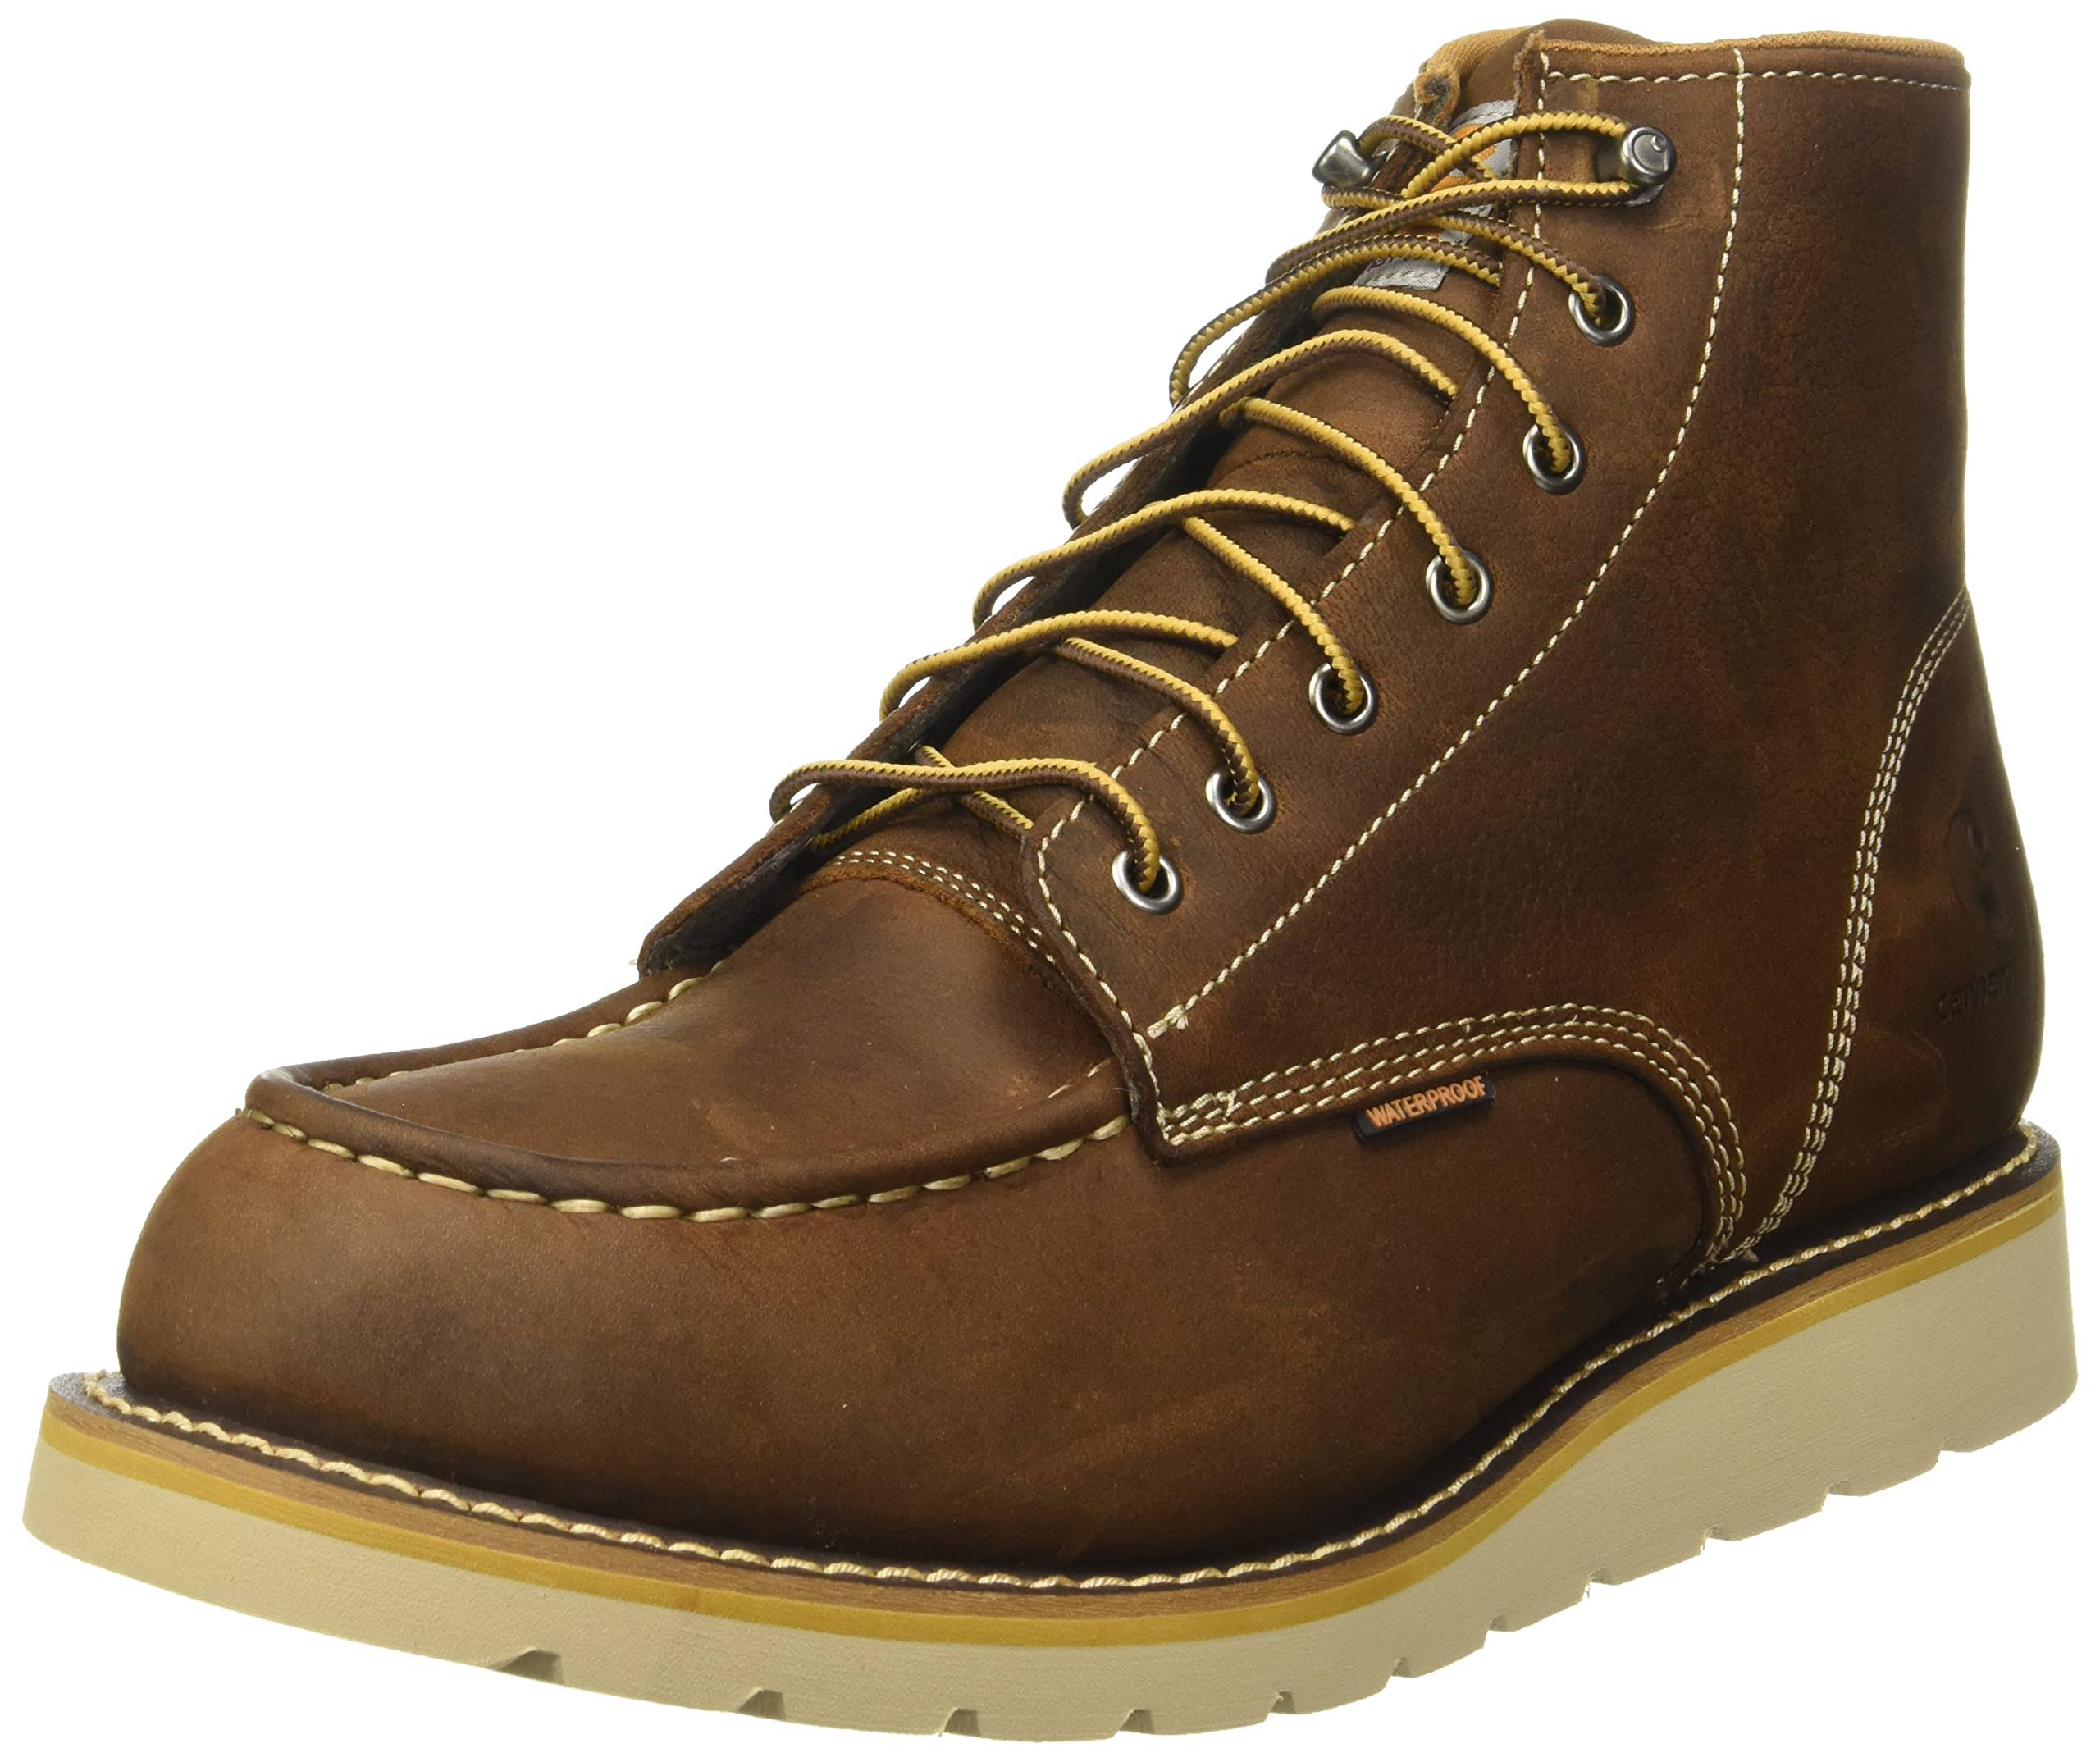 Carhartt Men's Moc Toe Wedge Waterproof Work Boots - Brown, 11.5 US, 6"